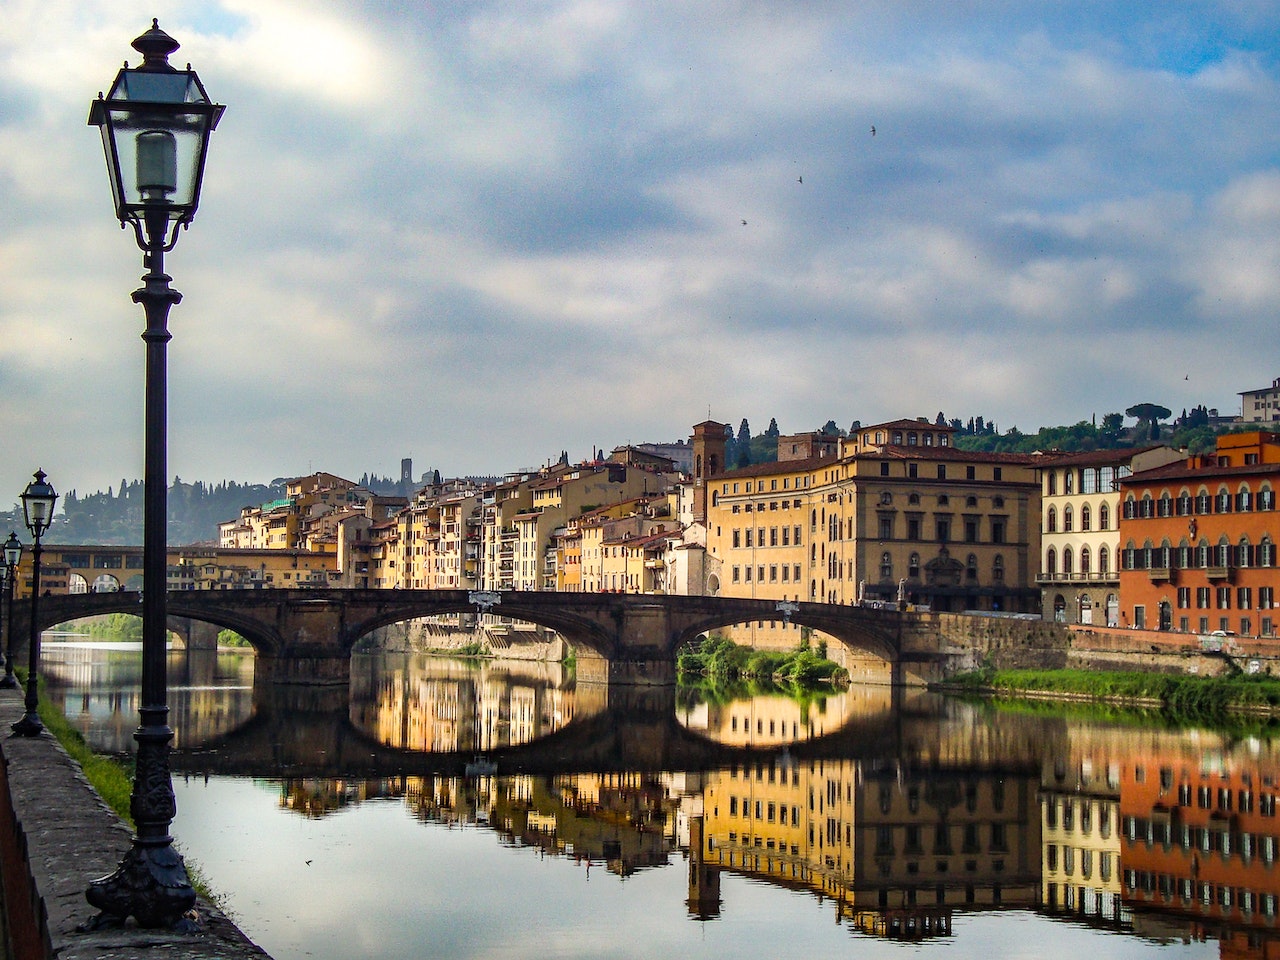 Bridge in Firenze